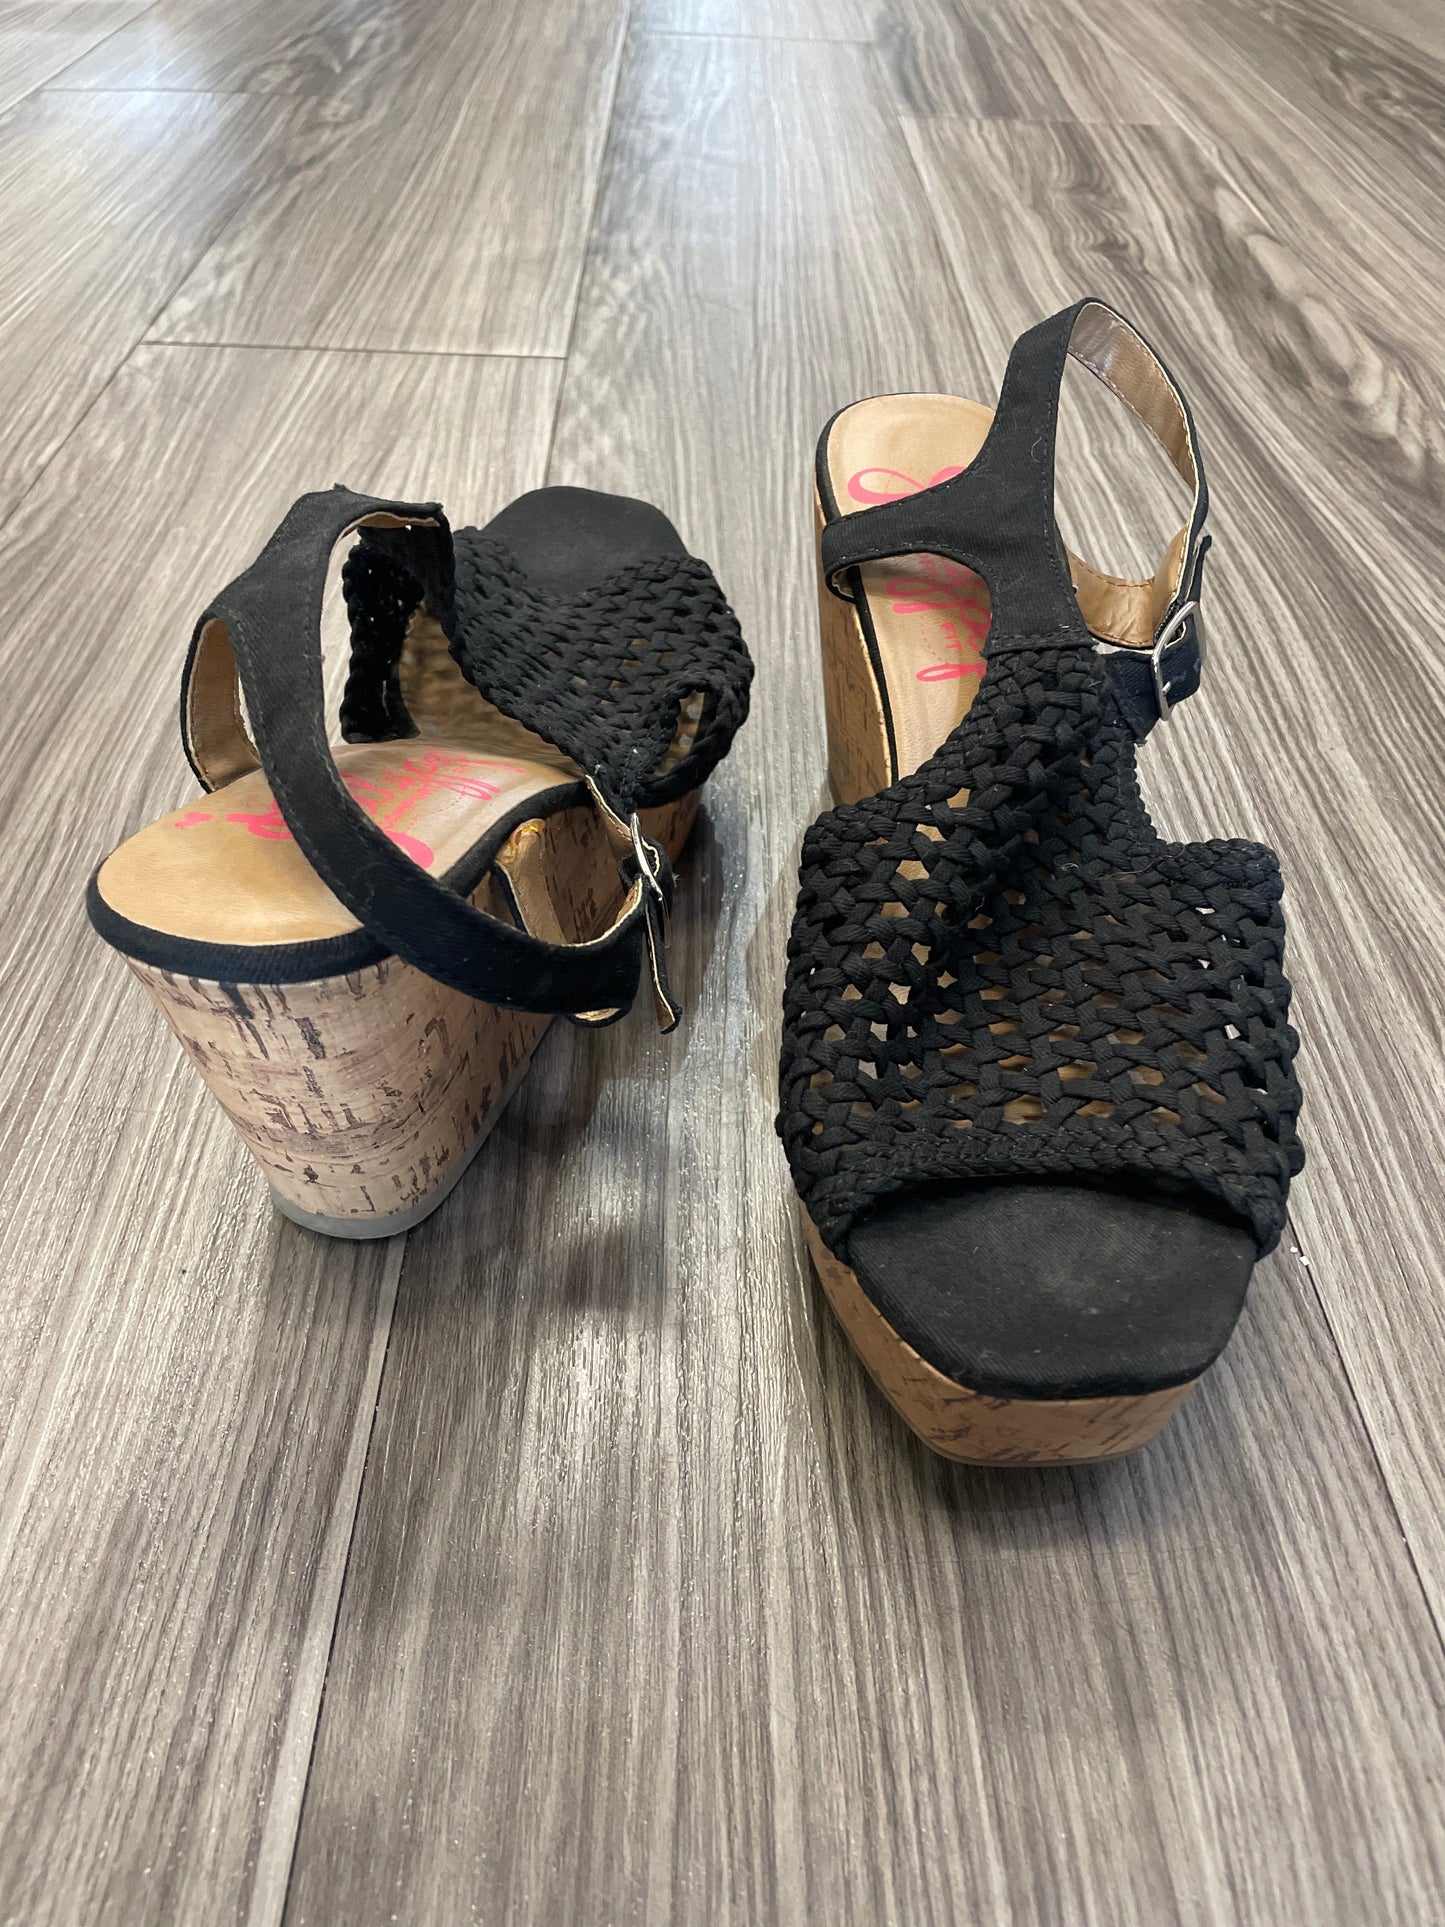 Black & Tan Sandals Heels Wedge Jelly Pop, Size 11